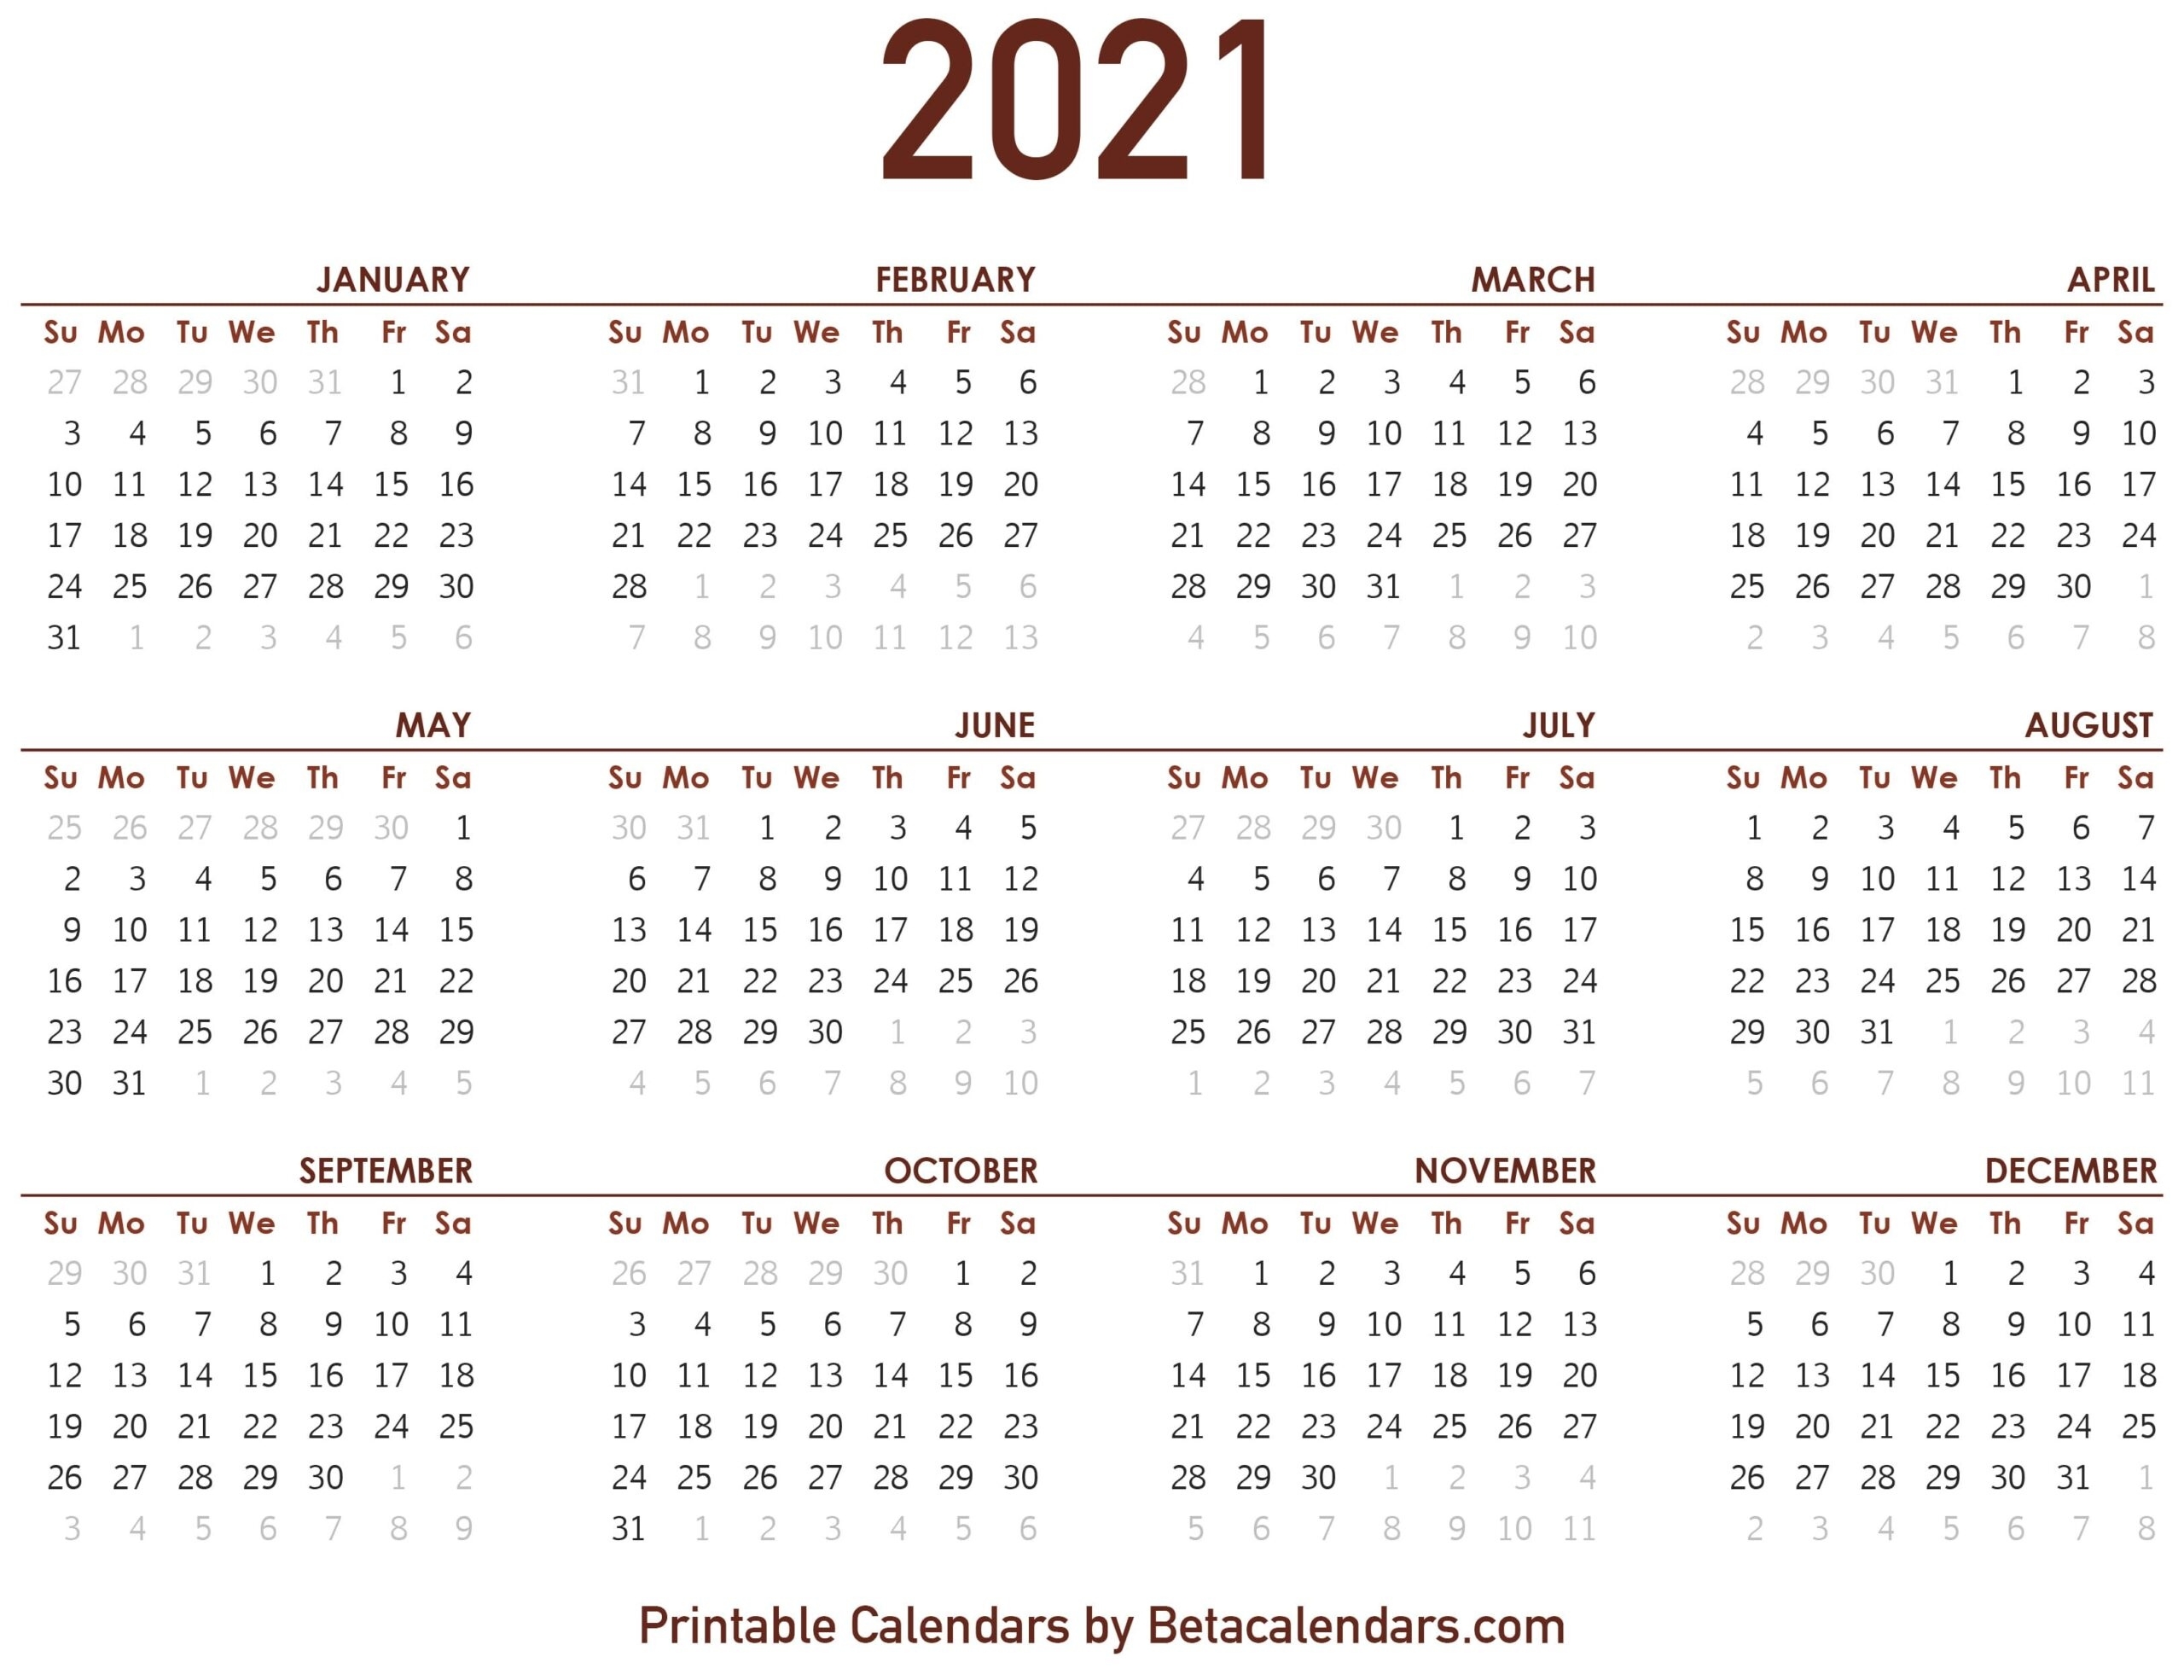 2021 Calendar - Beta Calendars Календарь 2021